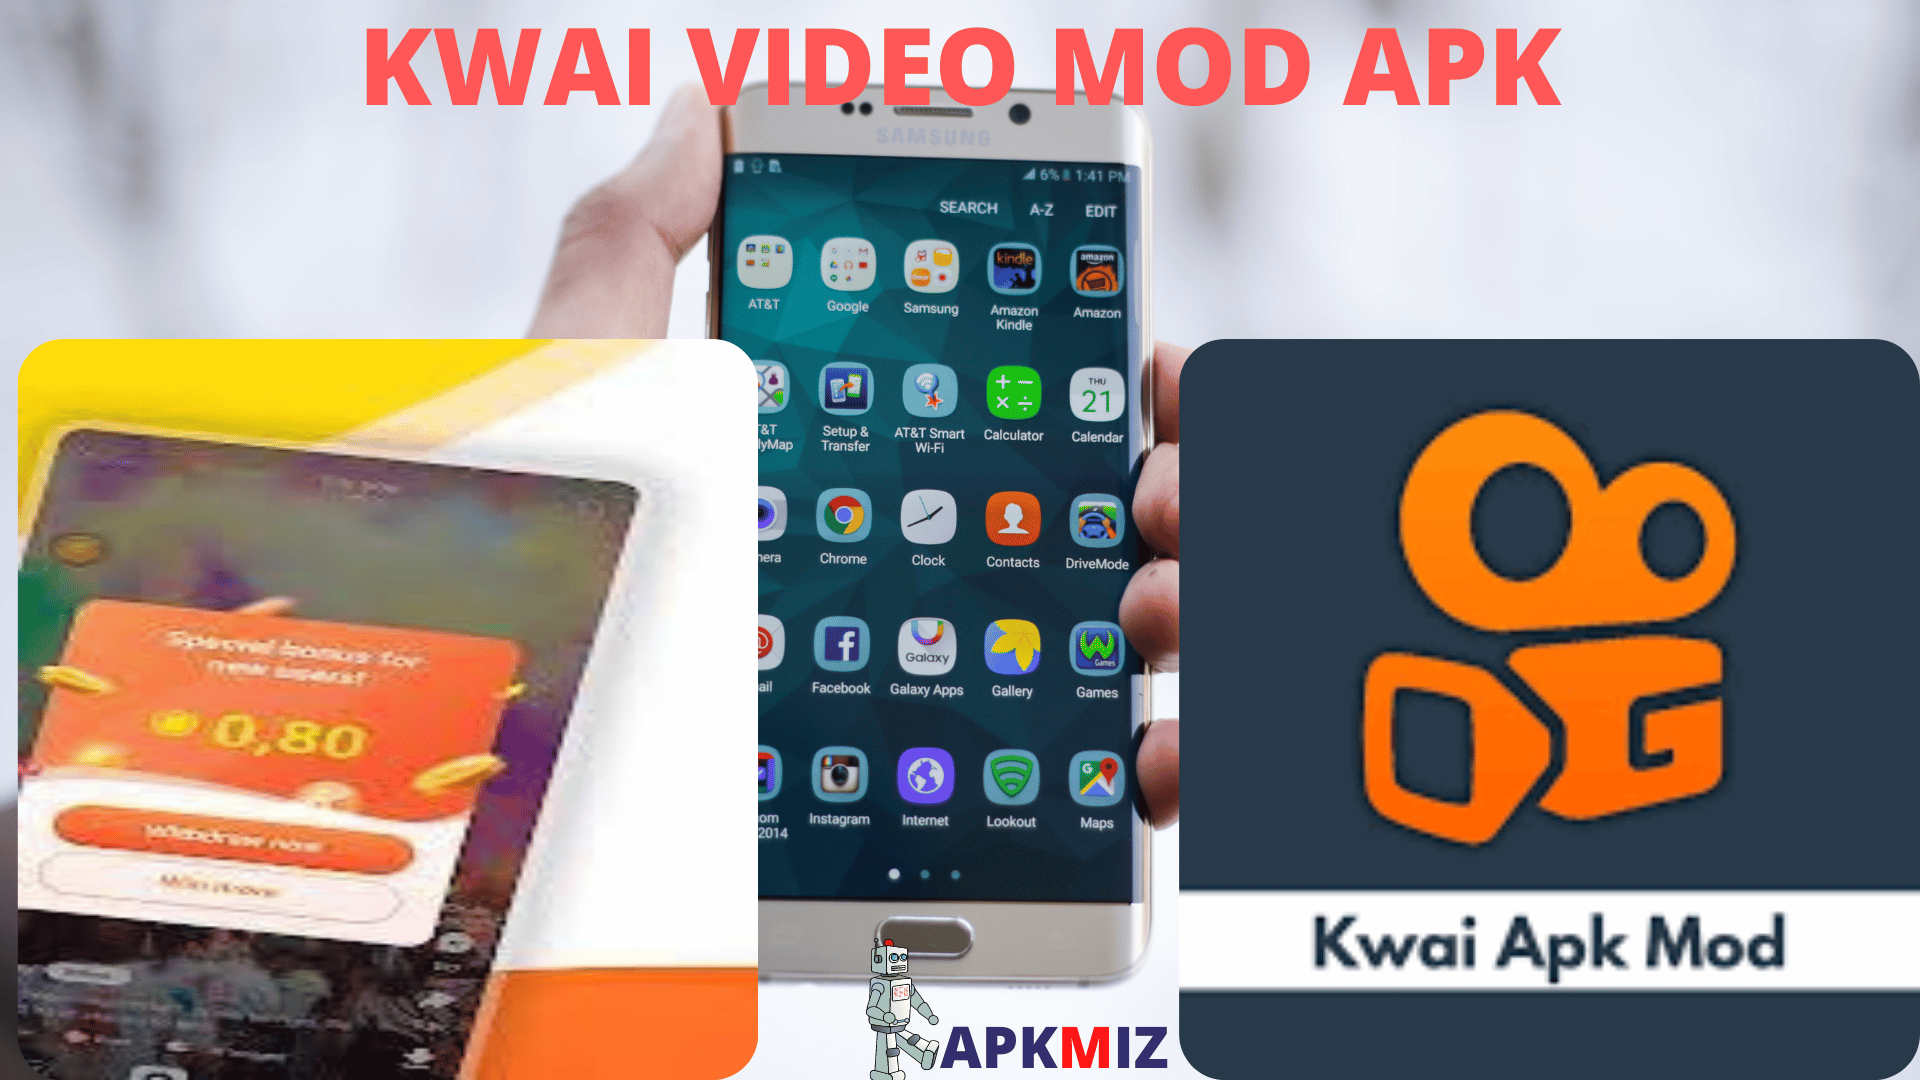 Kwai Video Mod Apk